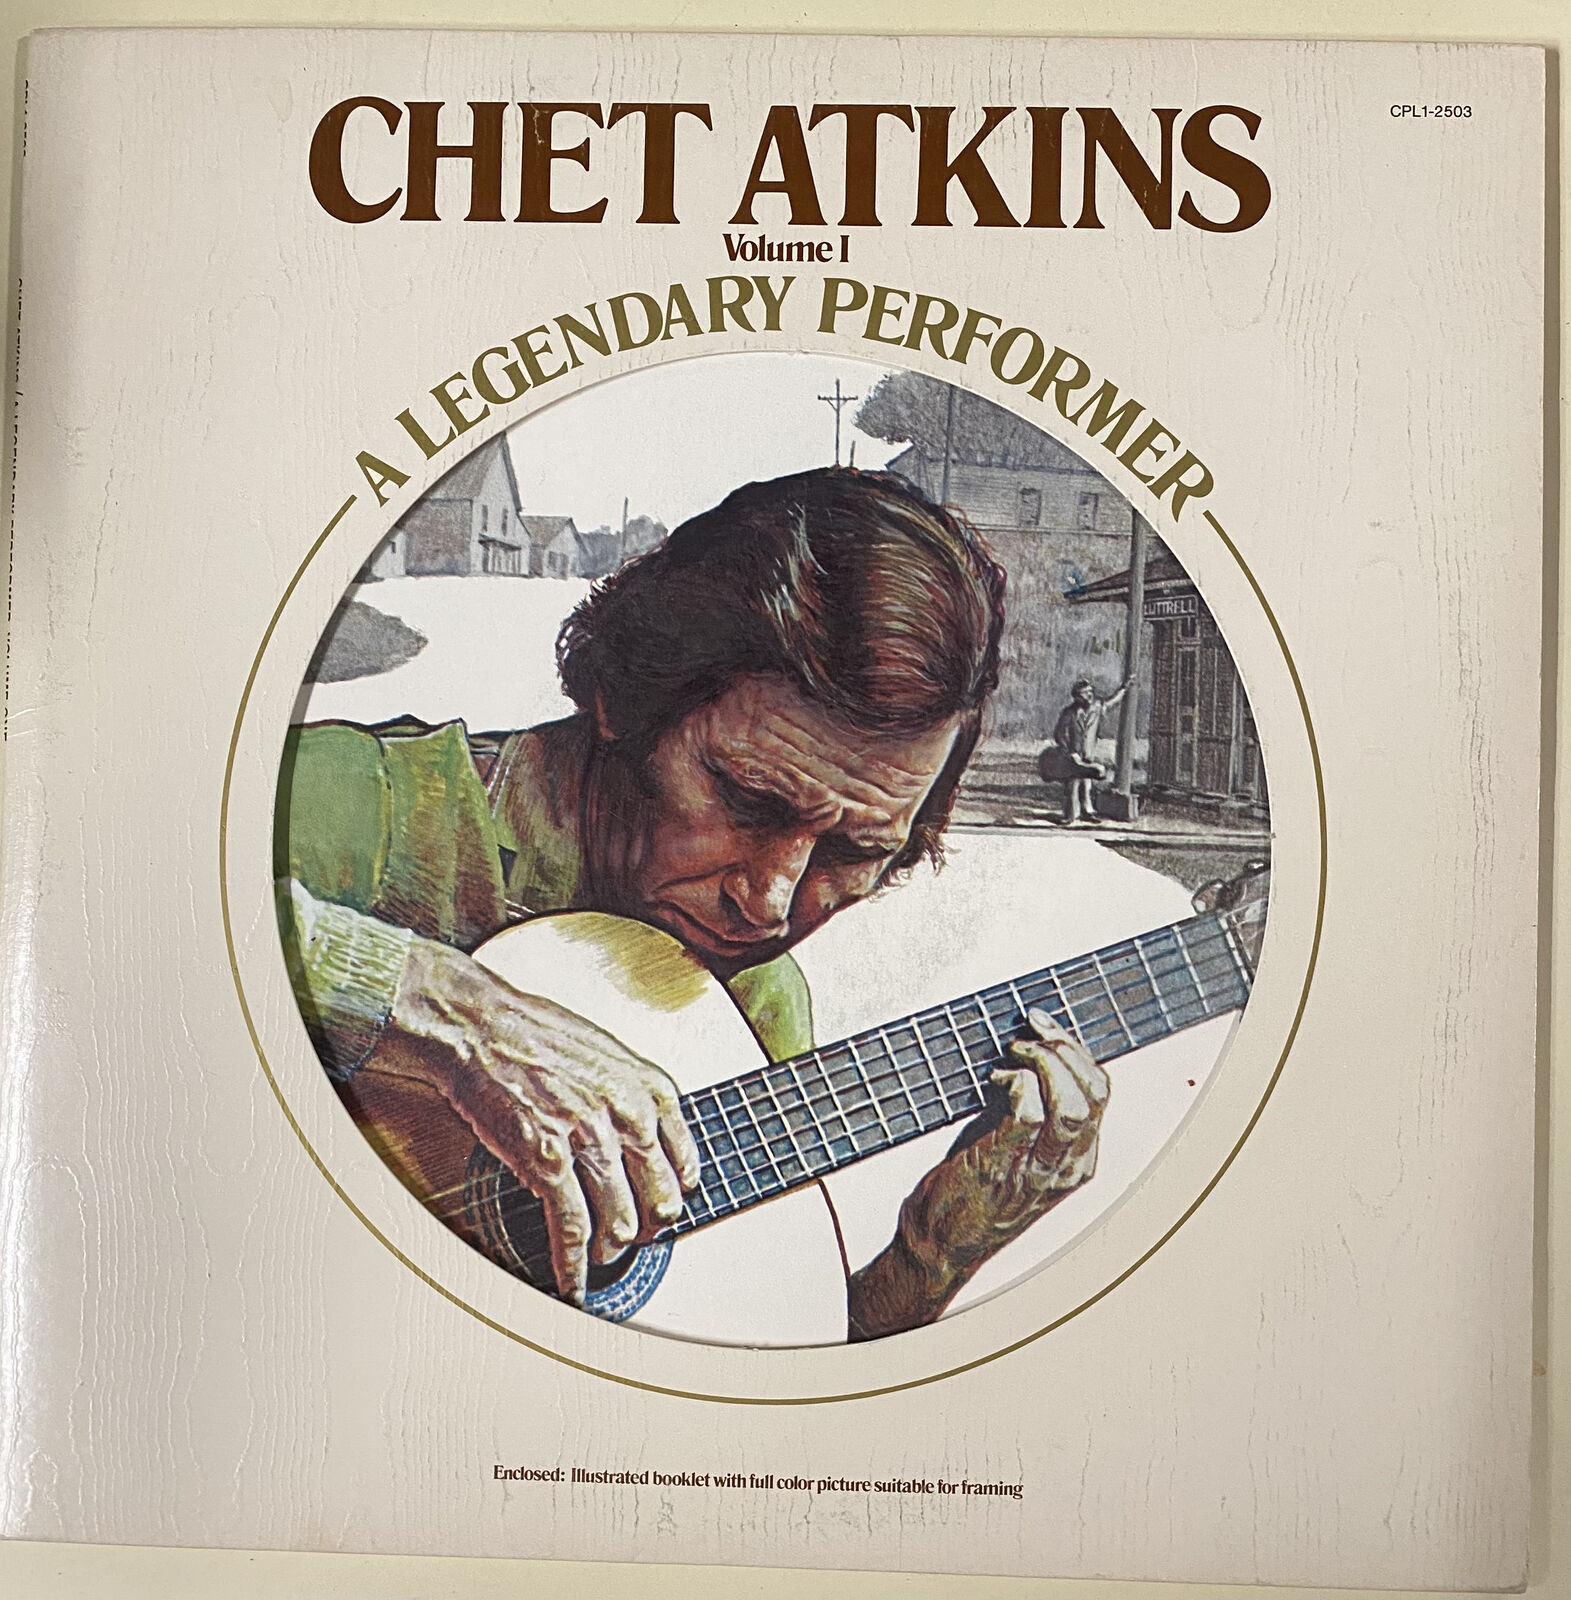 Chet Atkins  A LEGENDARY PERFORMER, VOL 1  lp